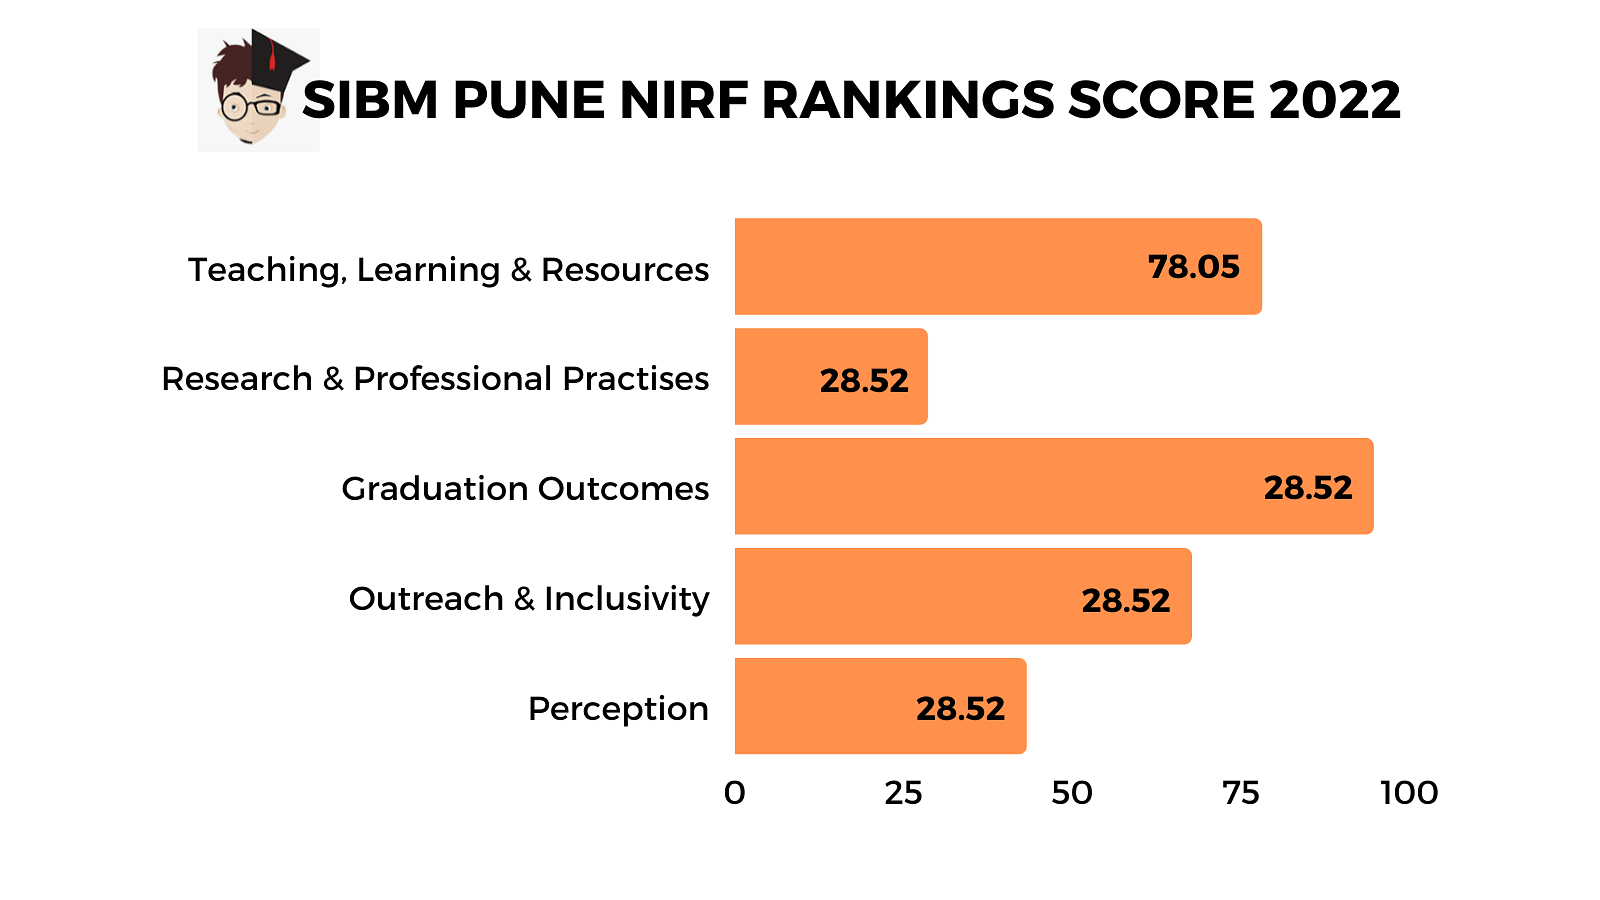 SIBM Pune NIRF ranking 2022 scores